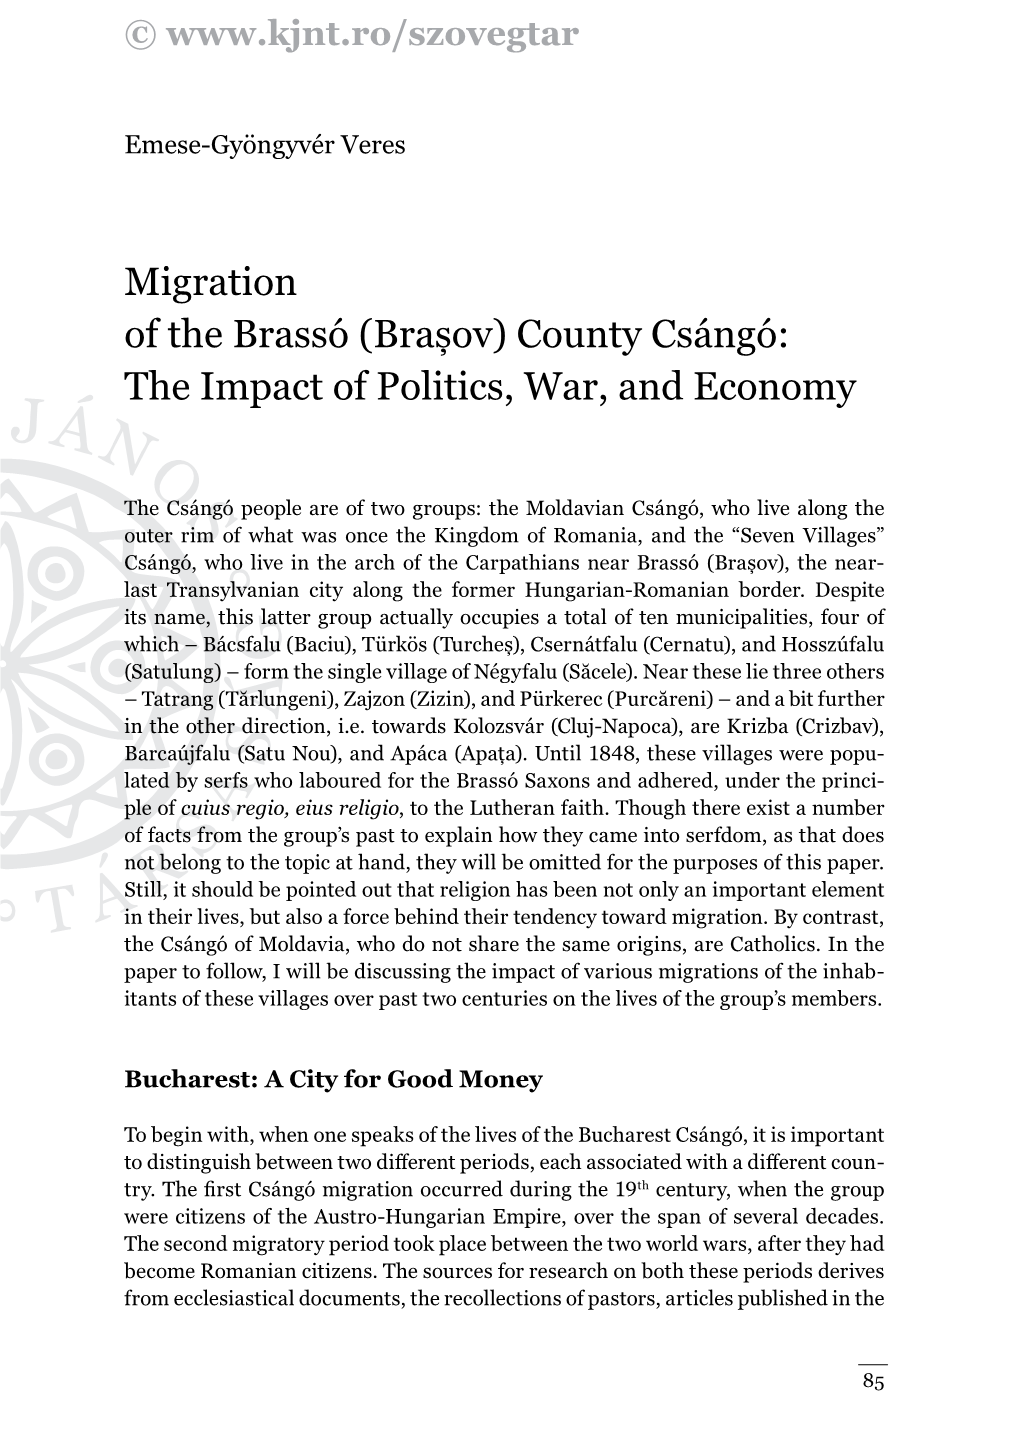 Migration of the Brassó (Brașov) County Csángó: the Impact of Politics, War, and Economy